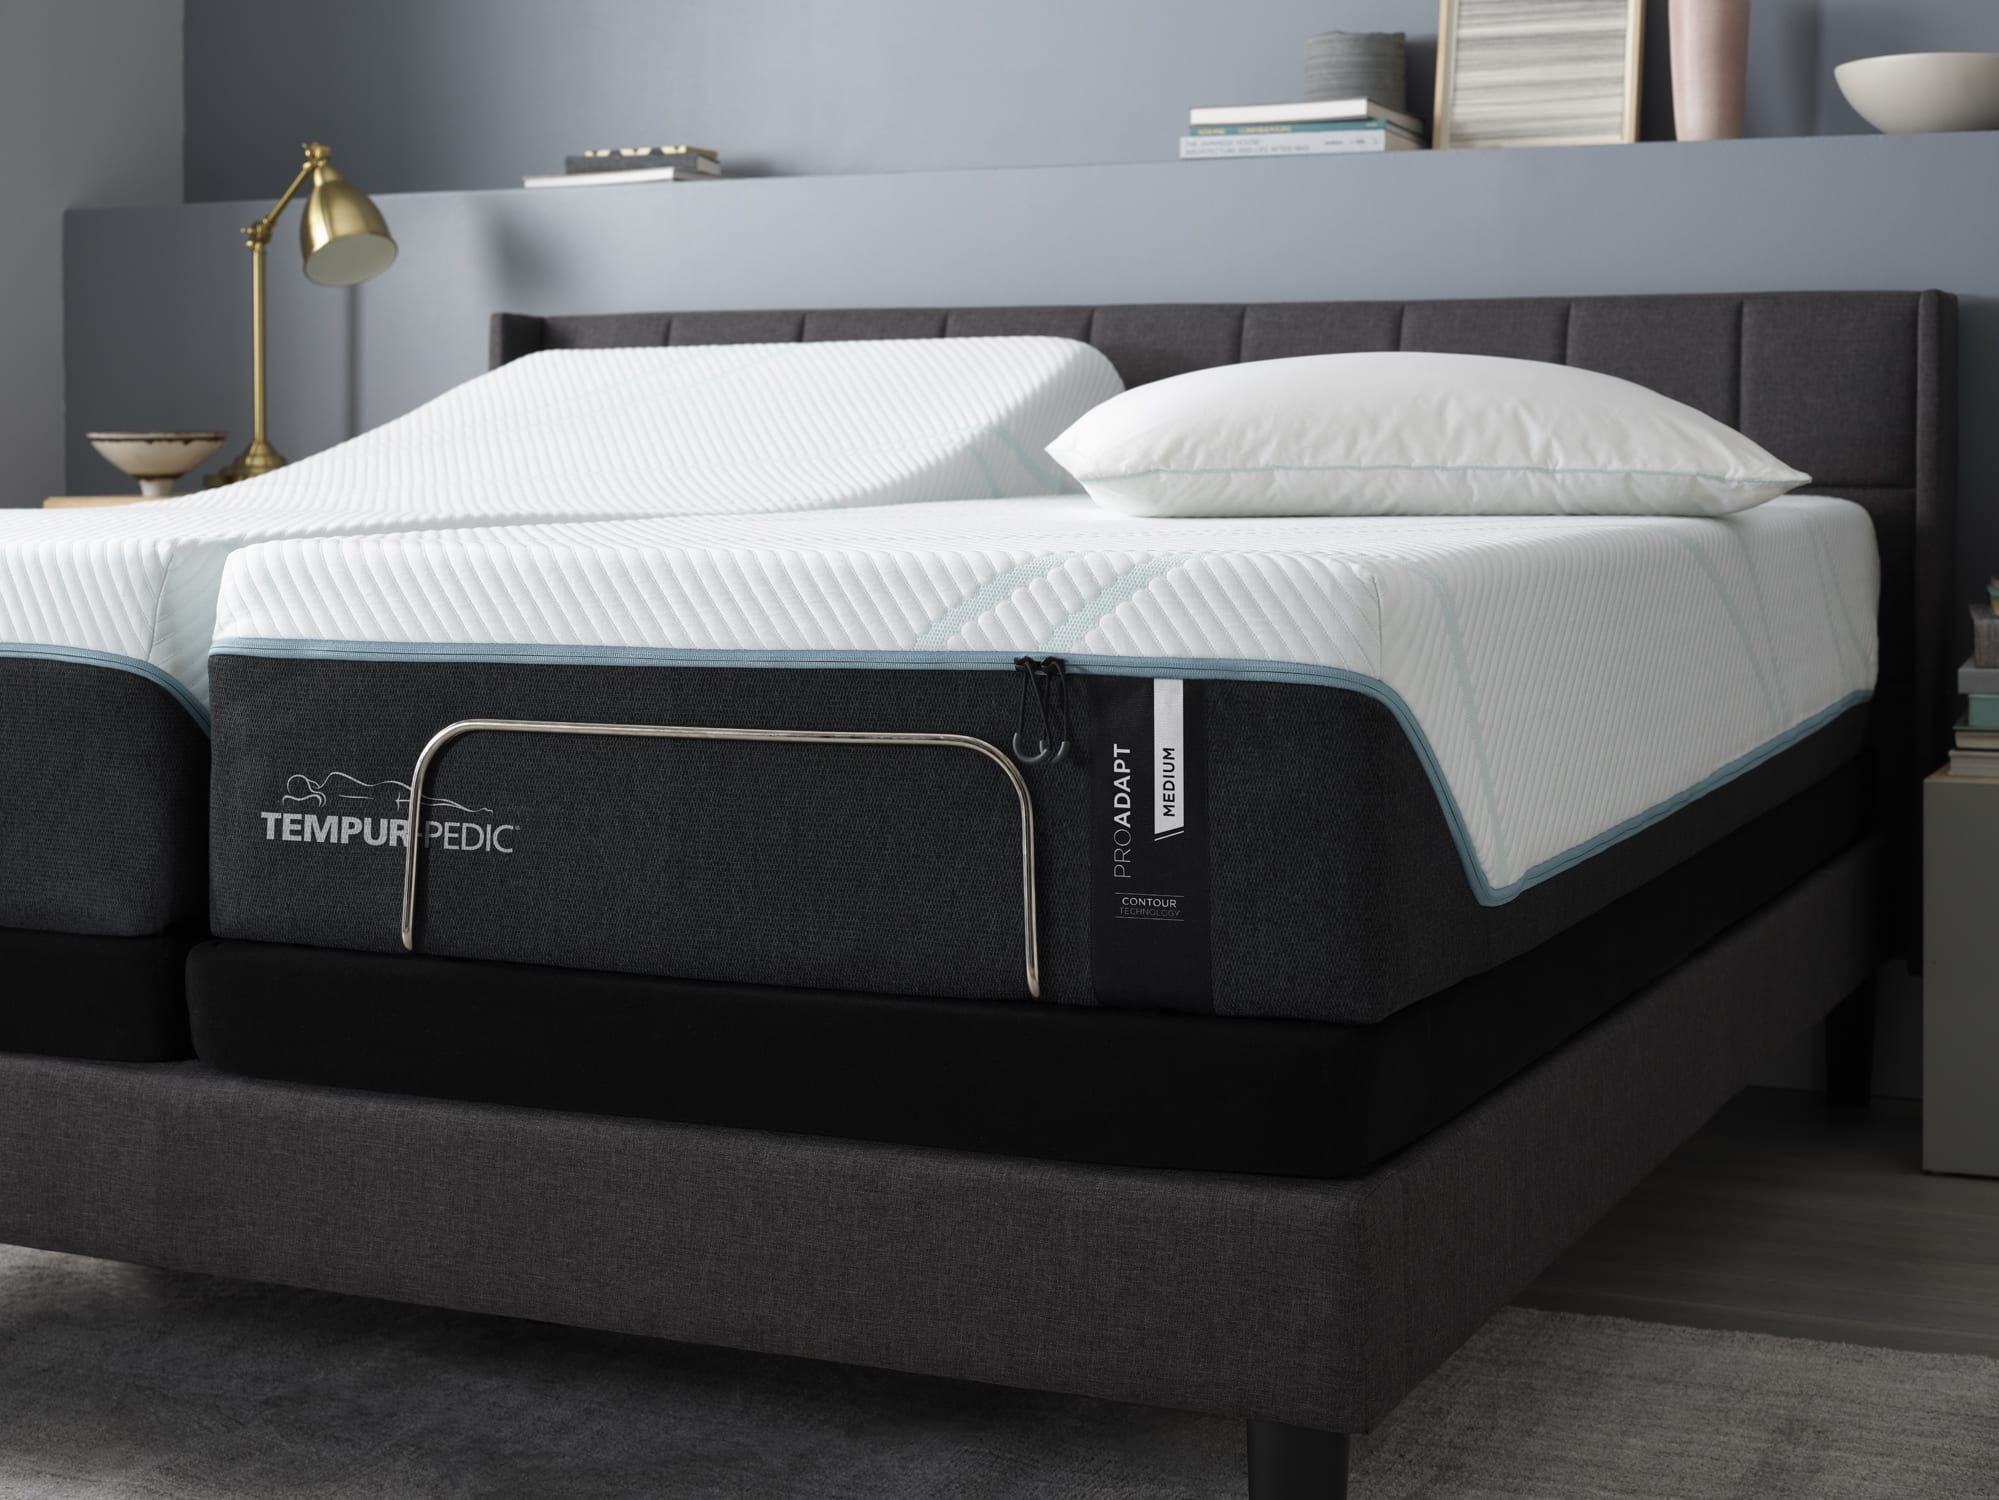 tempurpedic mattress and sleep apnea